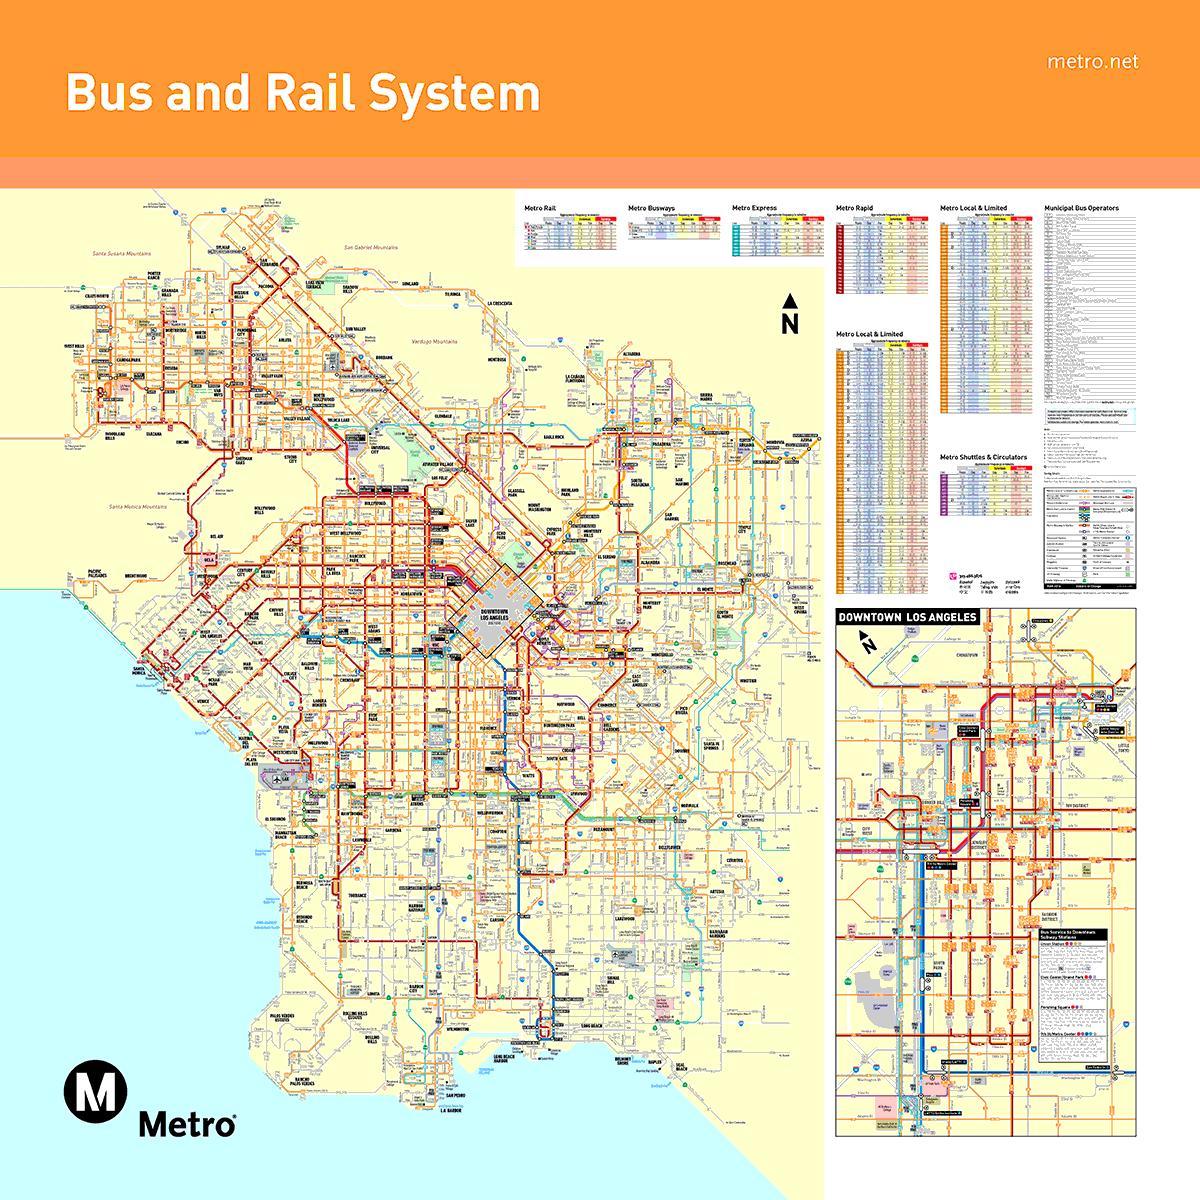 Los Angeles metro حافلة خريطة